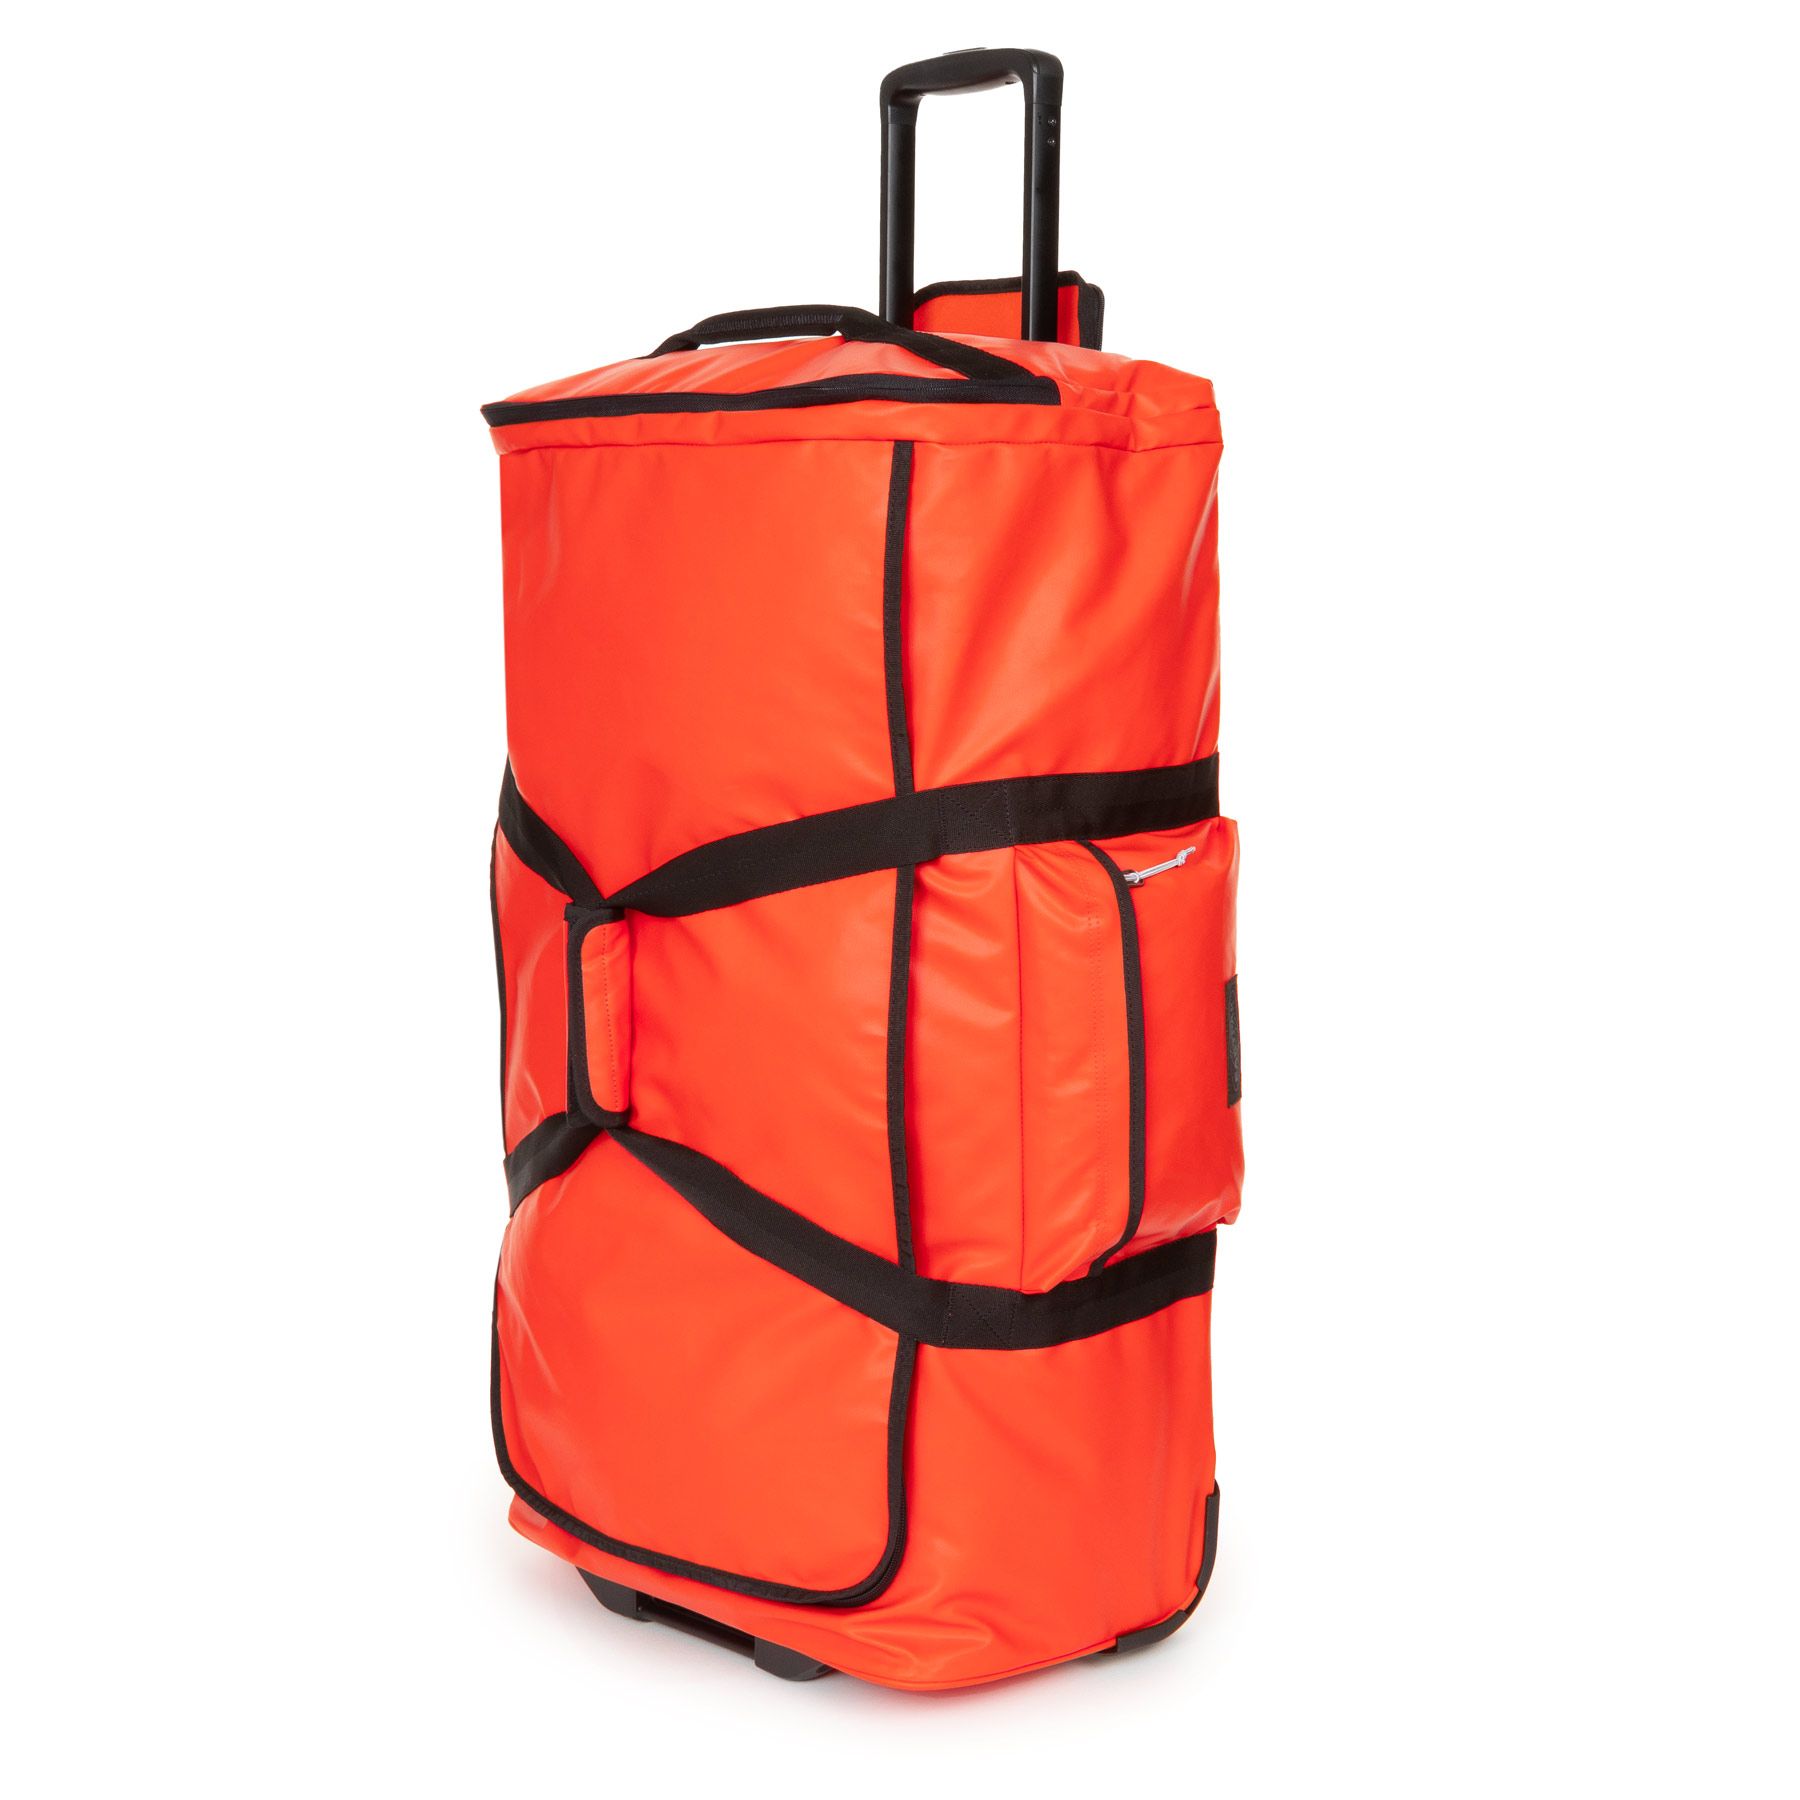 Eastpak Tarp Duffl'r 85 Wheeled Travel Bag